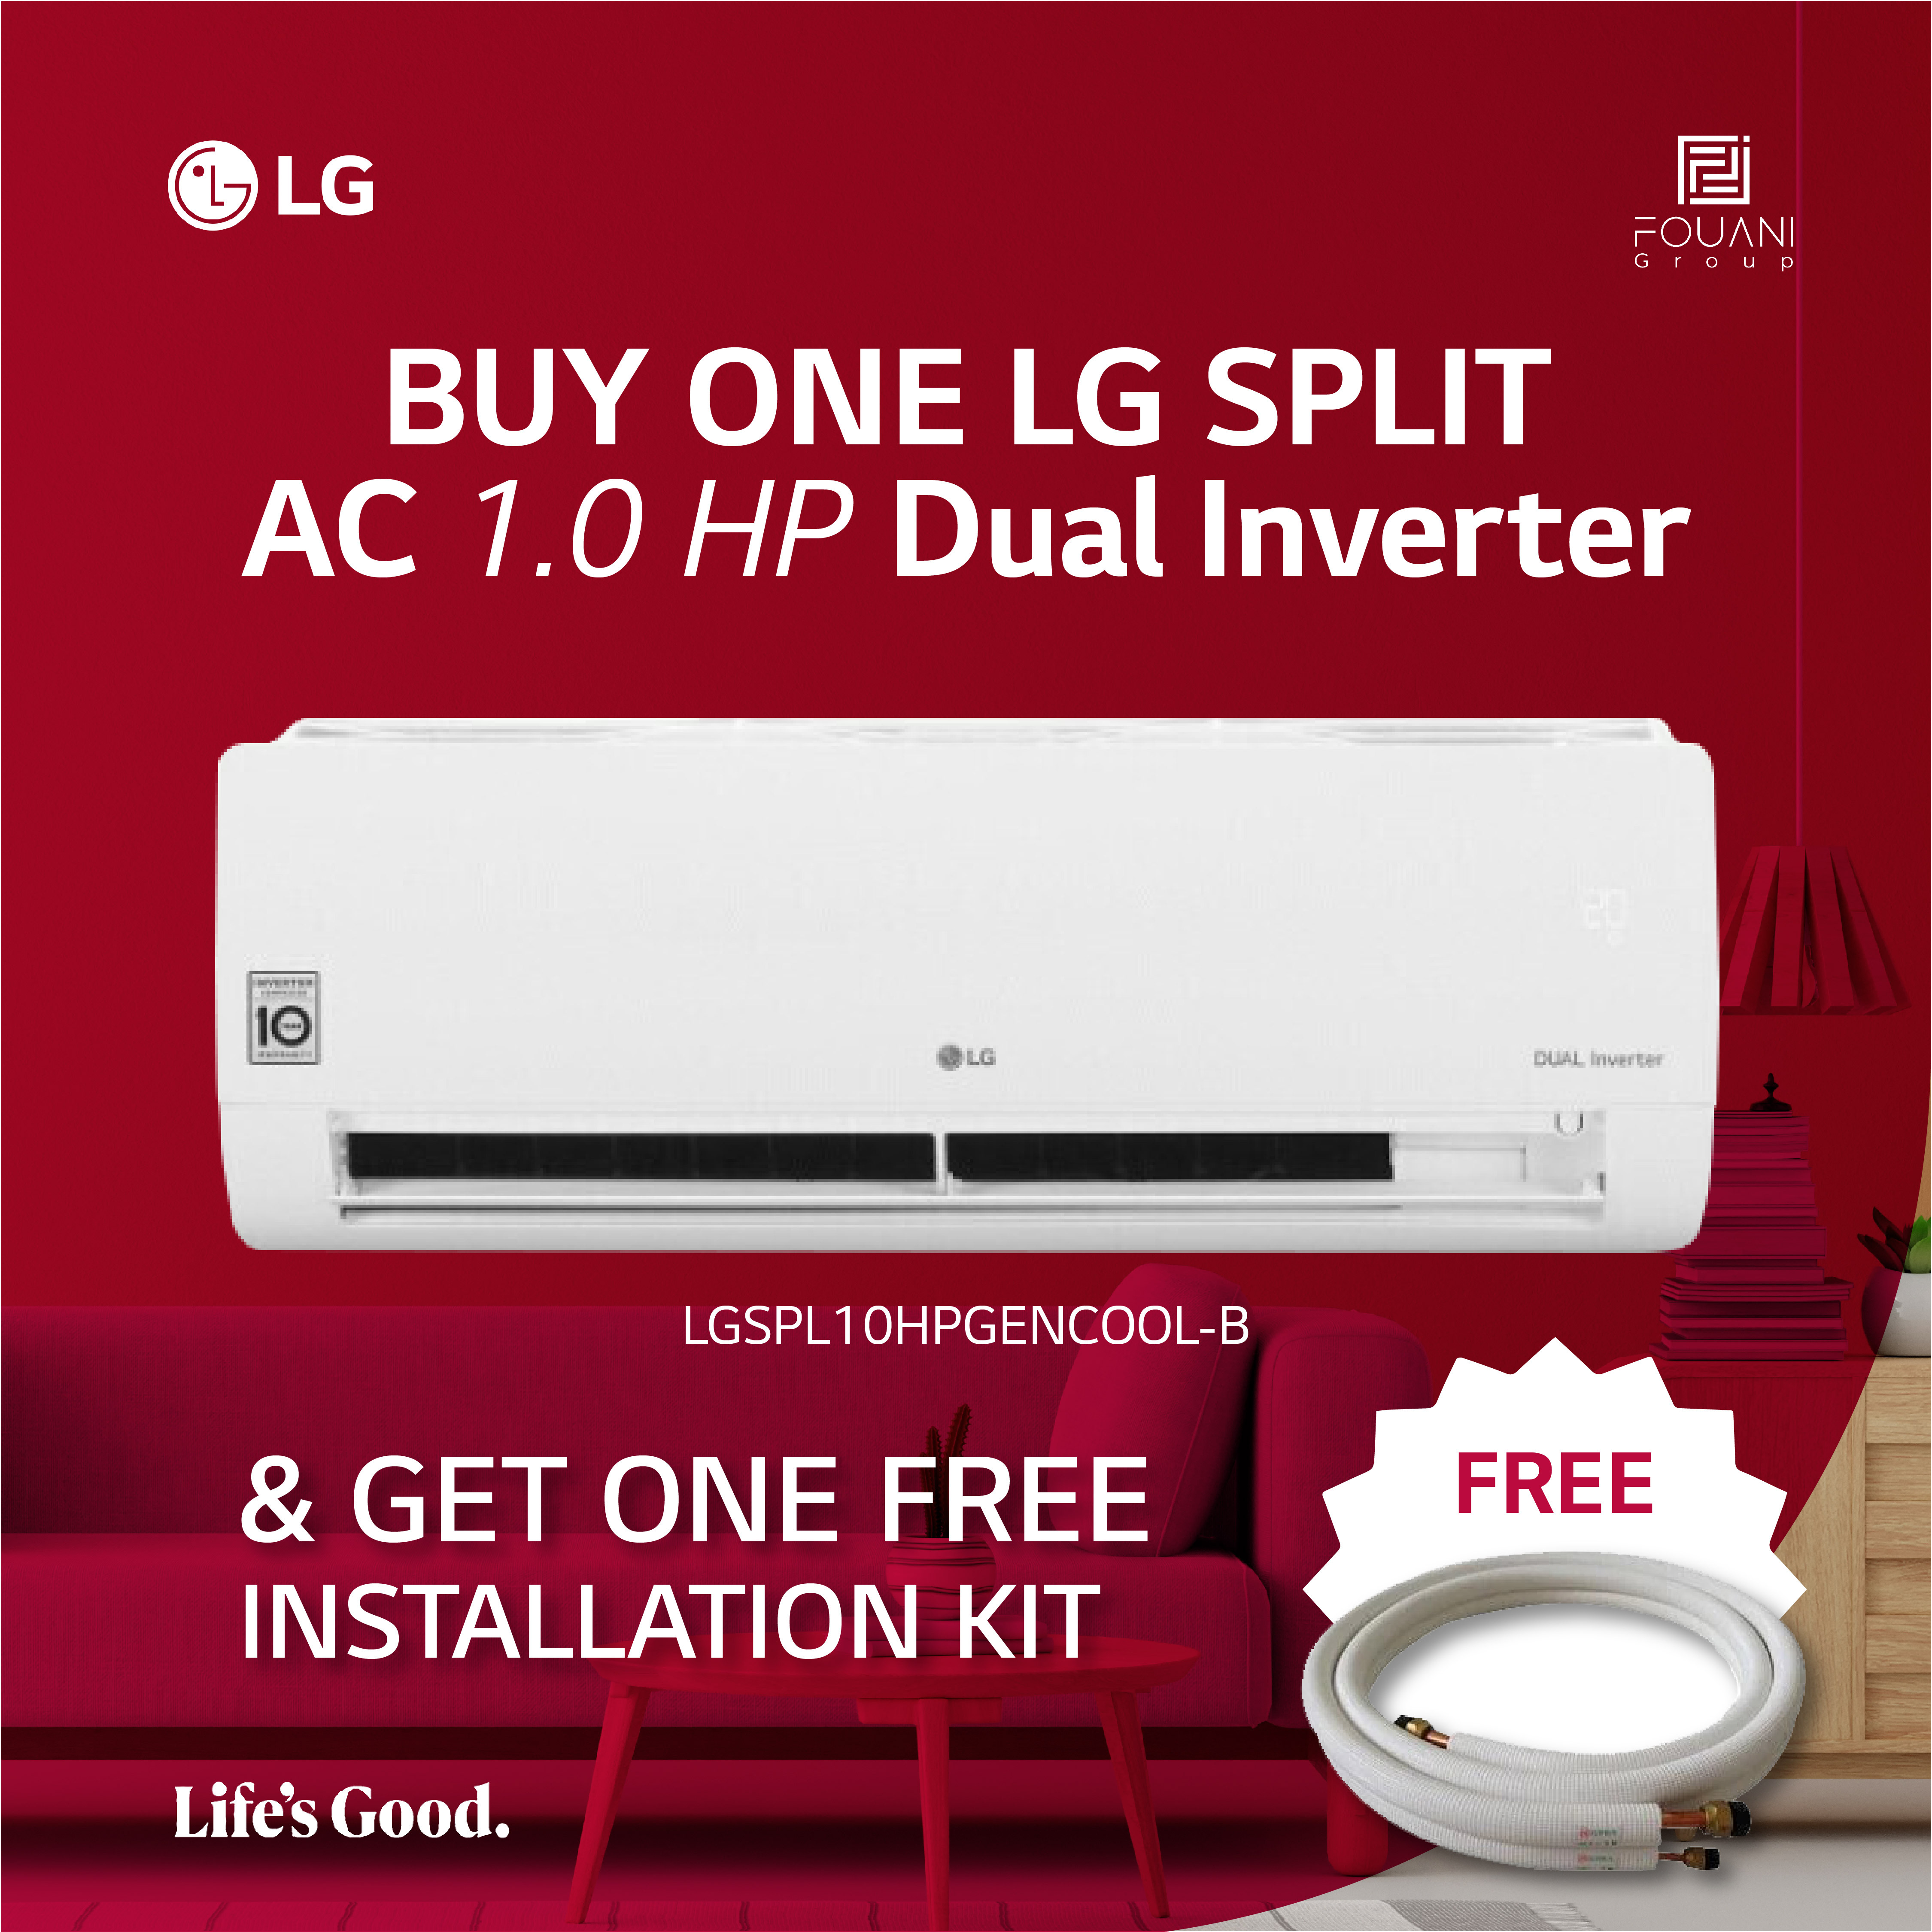 LG Split AC 1.0HP Dual Inverter